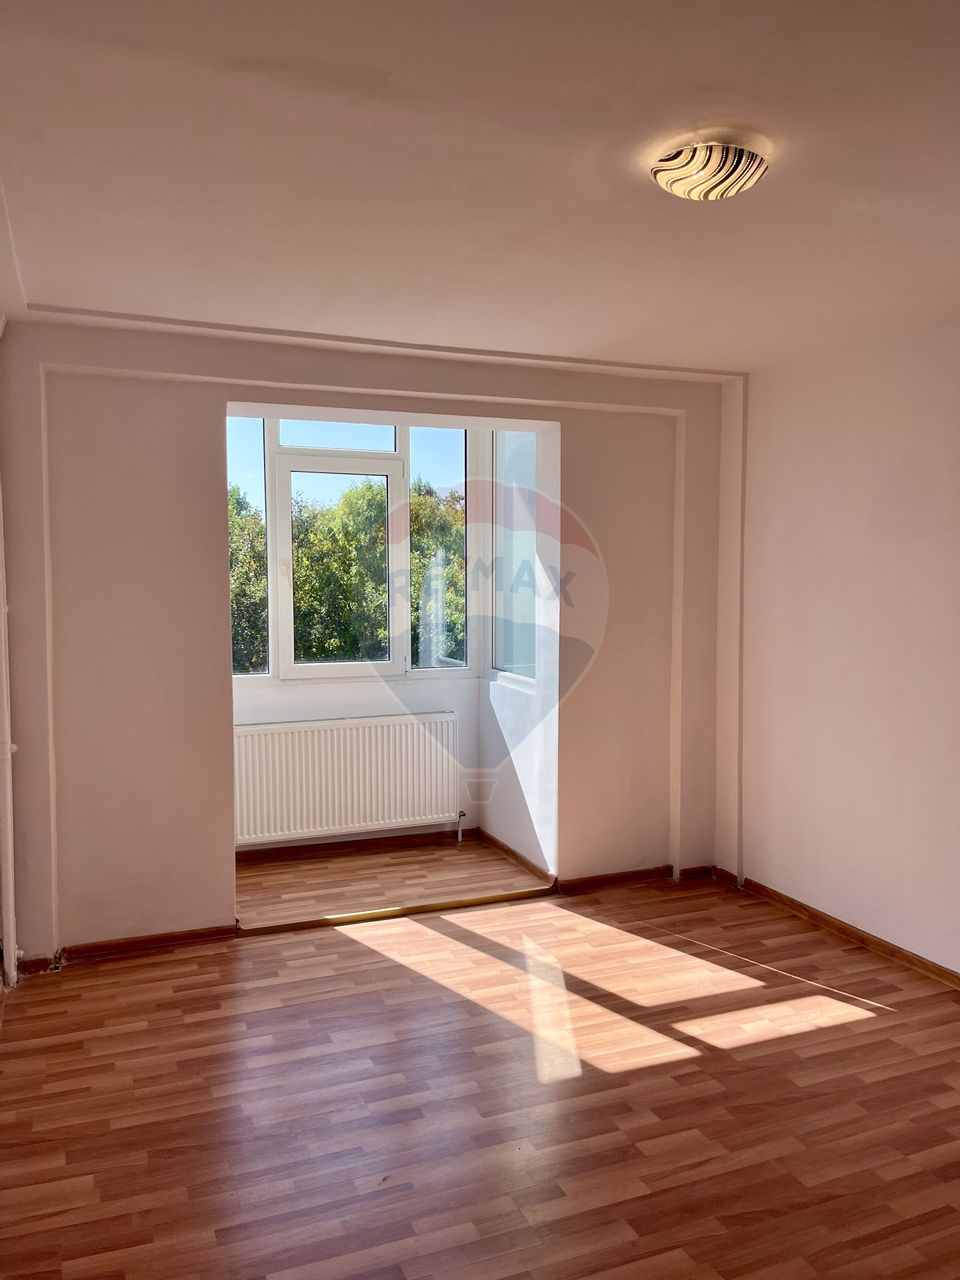 2 room Apartment for sale, Brancoveanu area